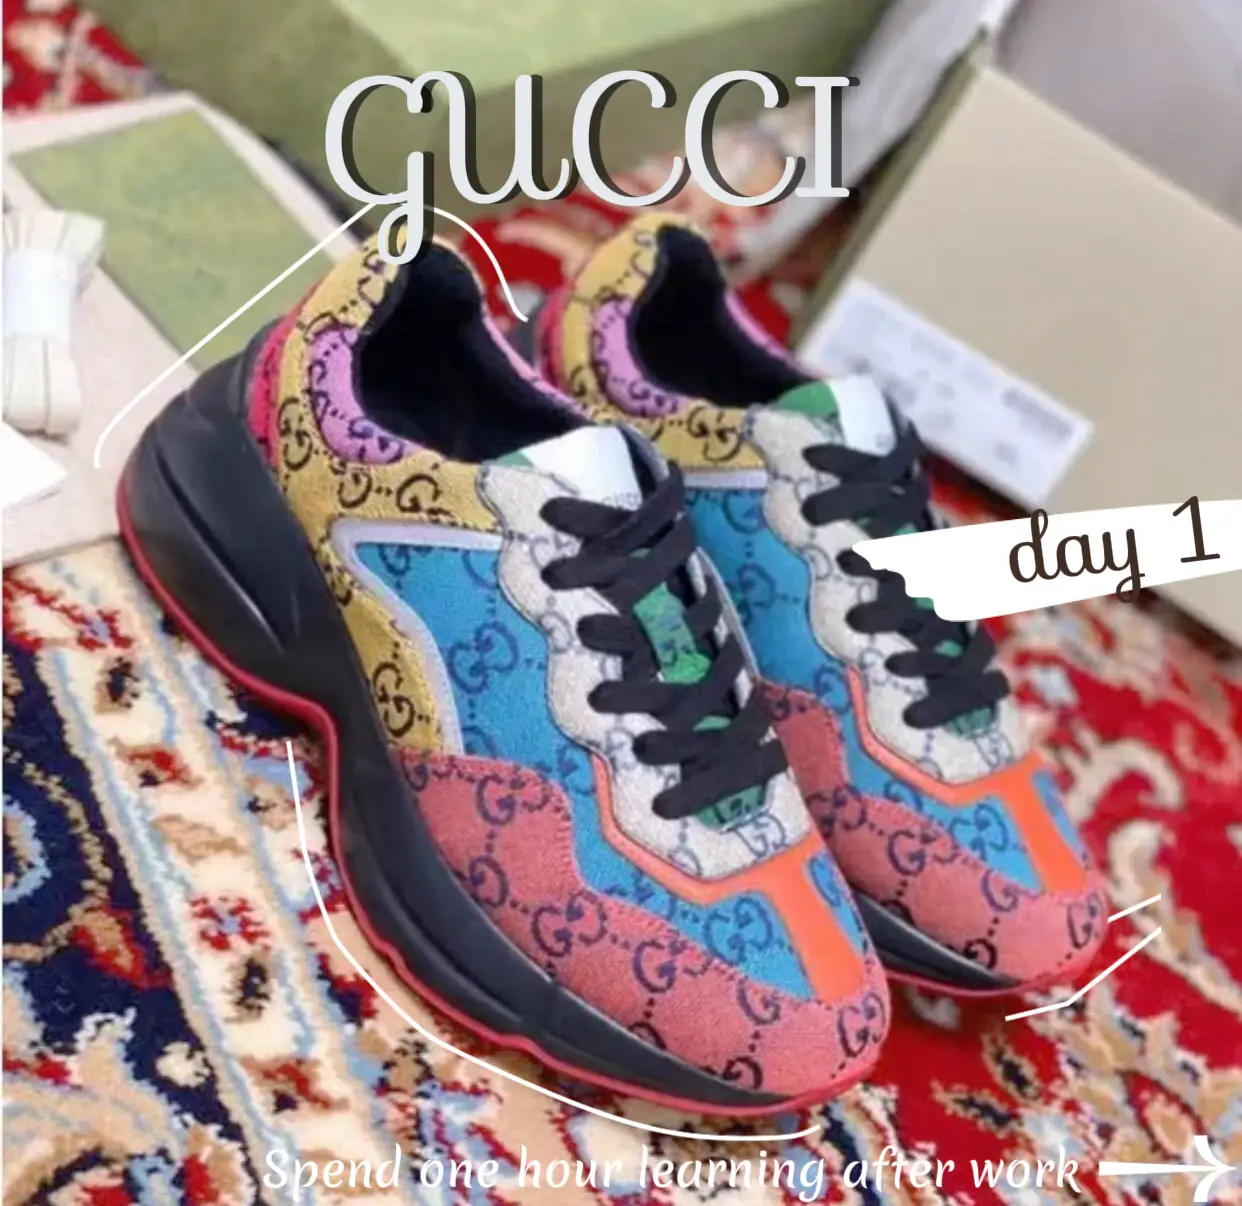 SHOES & BAG SETS - Gucci Shoes - Ideas of Gucci Shoes #guccishoes #gucci  #fashion 